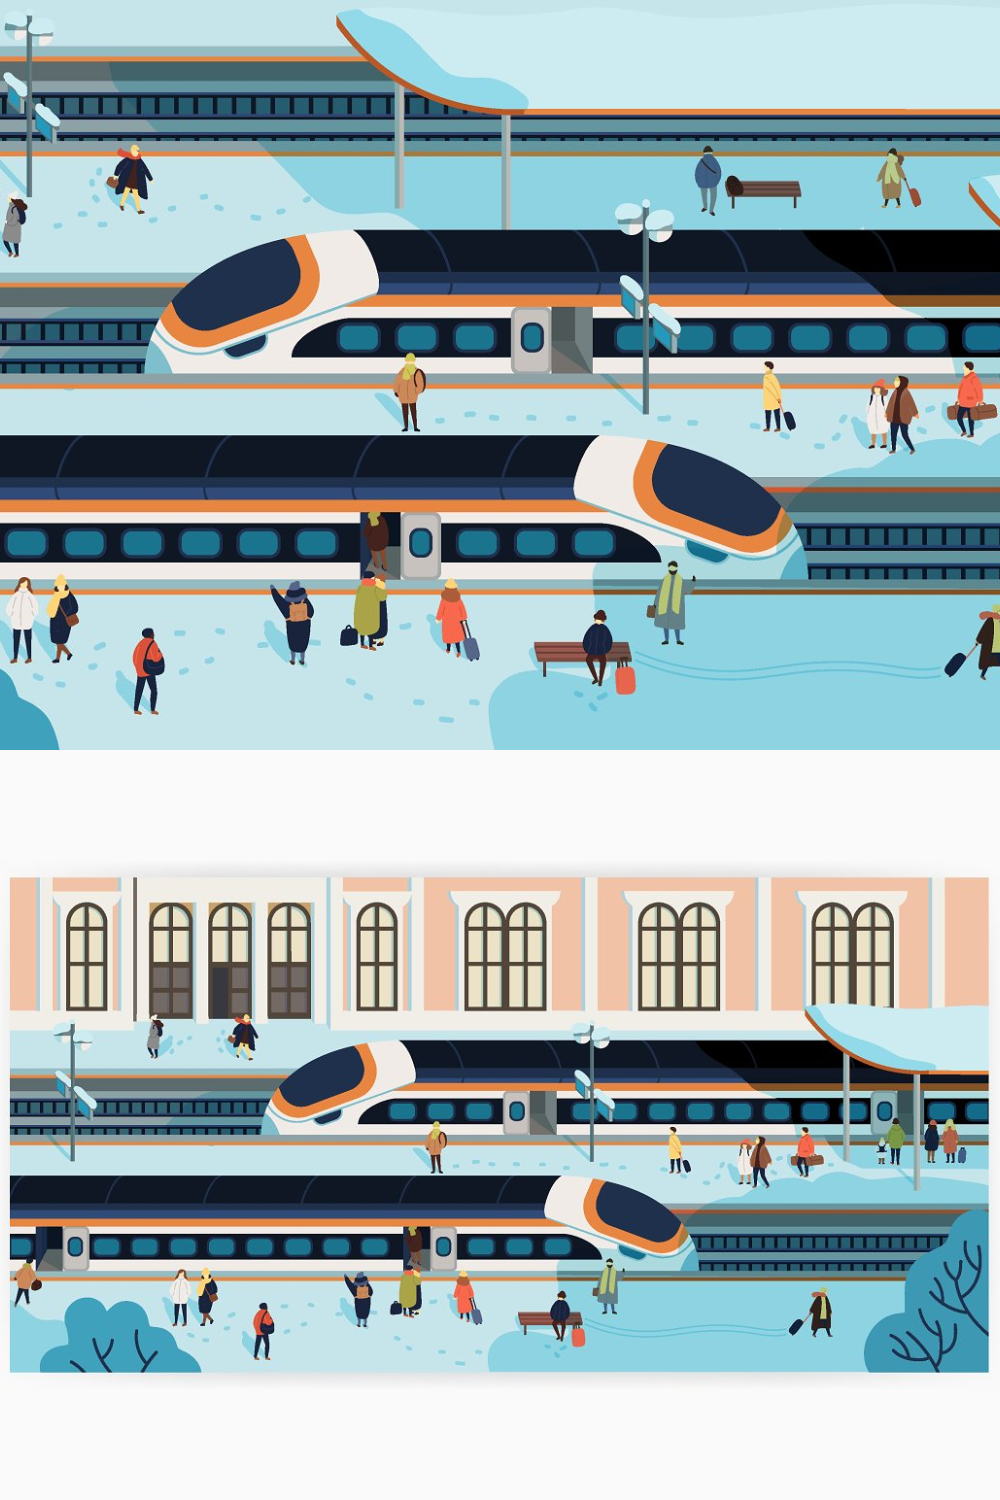 Railway Station Illustration - Pinterest.